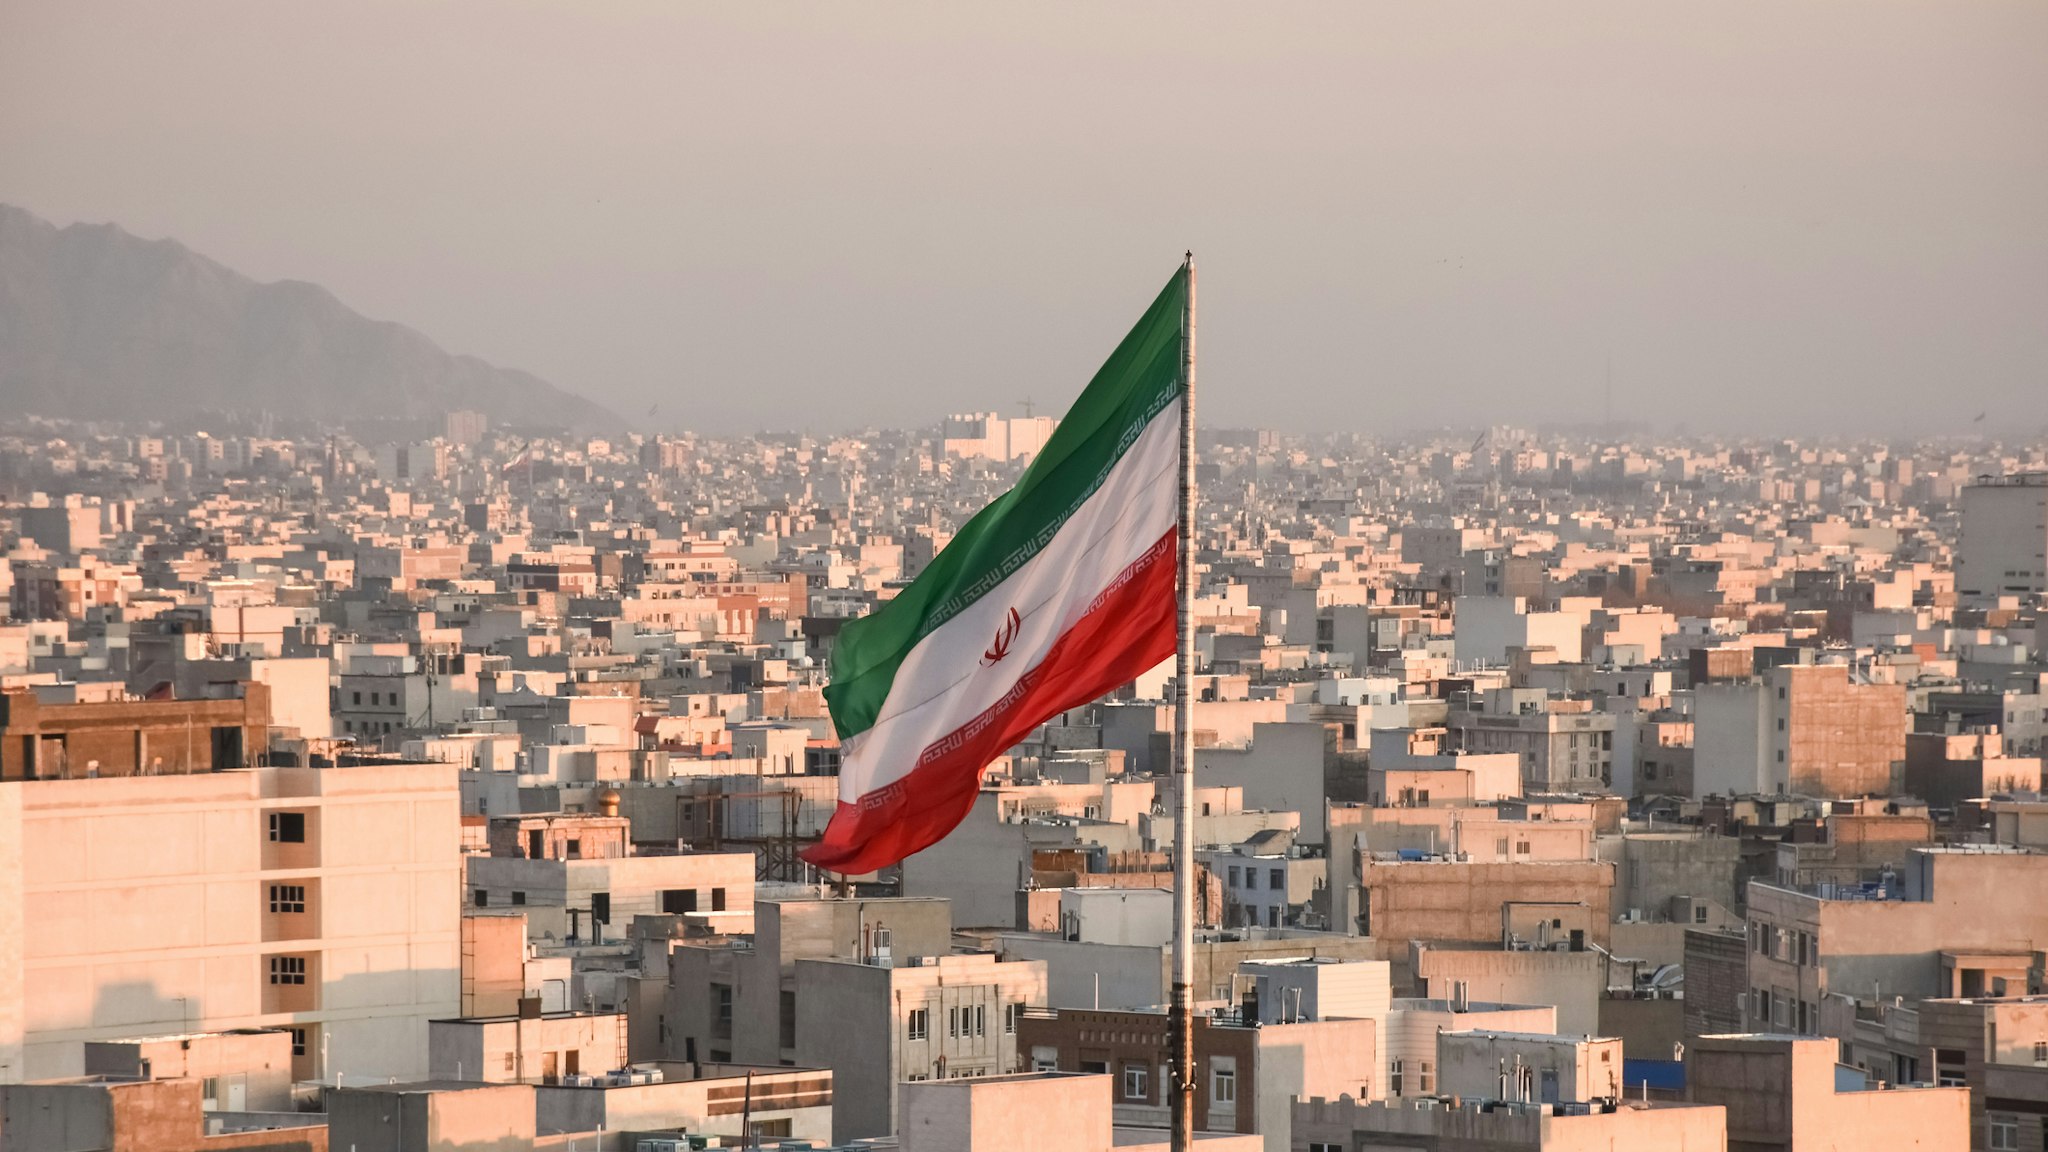 Iranian flag waving with city skyline on background in Tehran, Iran - stock photo